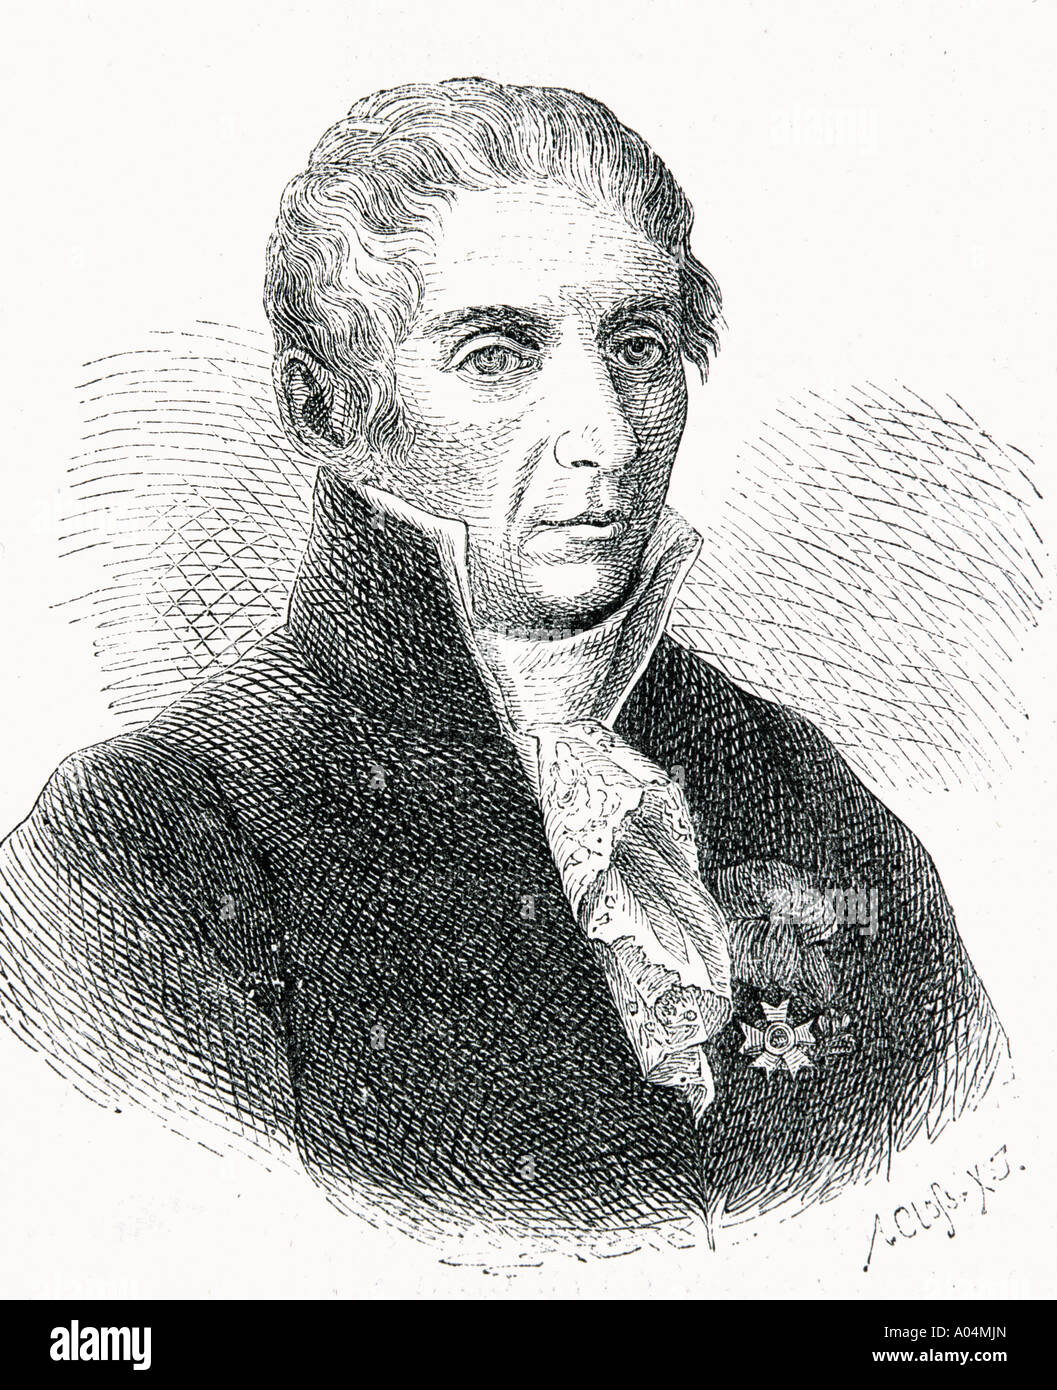 Alessandro Giuseppe Antonio Anastasio Volta, 1745 - 1827. Italian physicist who developed the electric battery. Engraved by Adolf Closs, 1840 to 1894. Stock Photo